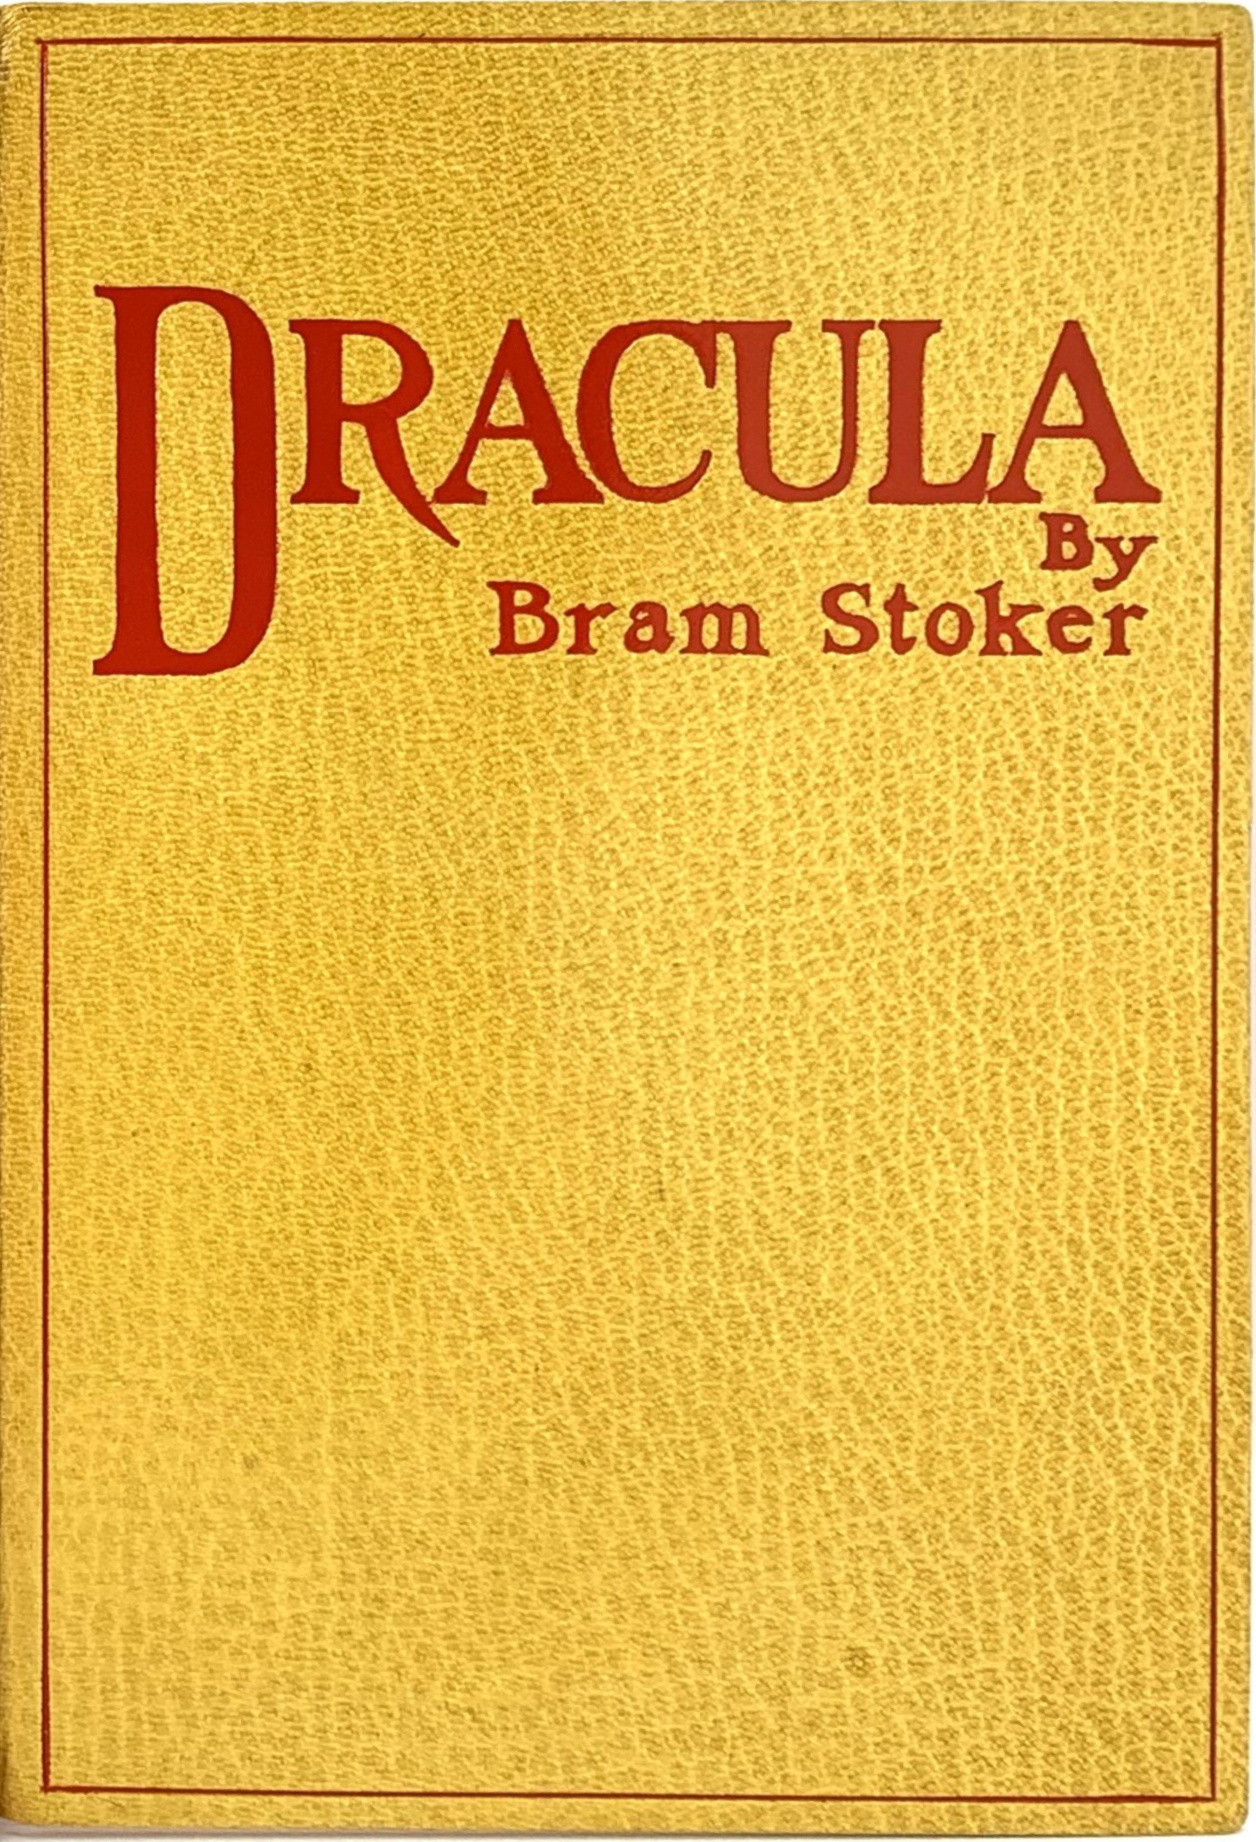 Book cover, Dracula by Bram Stoker.